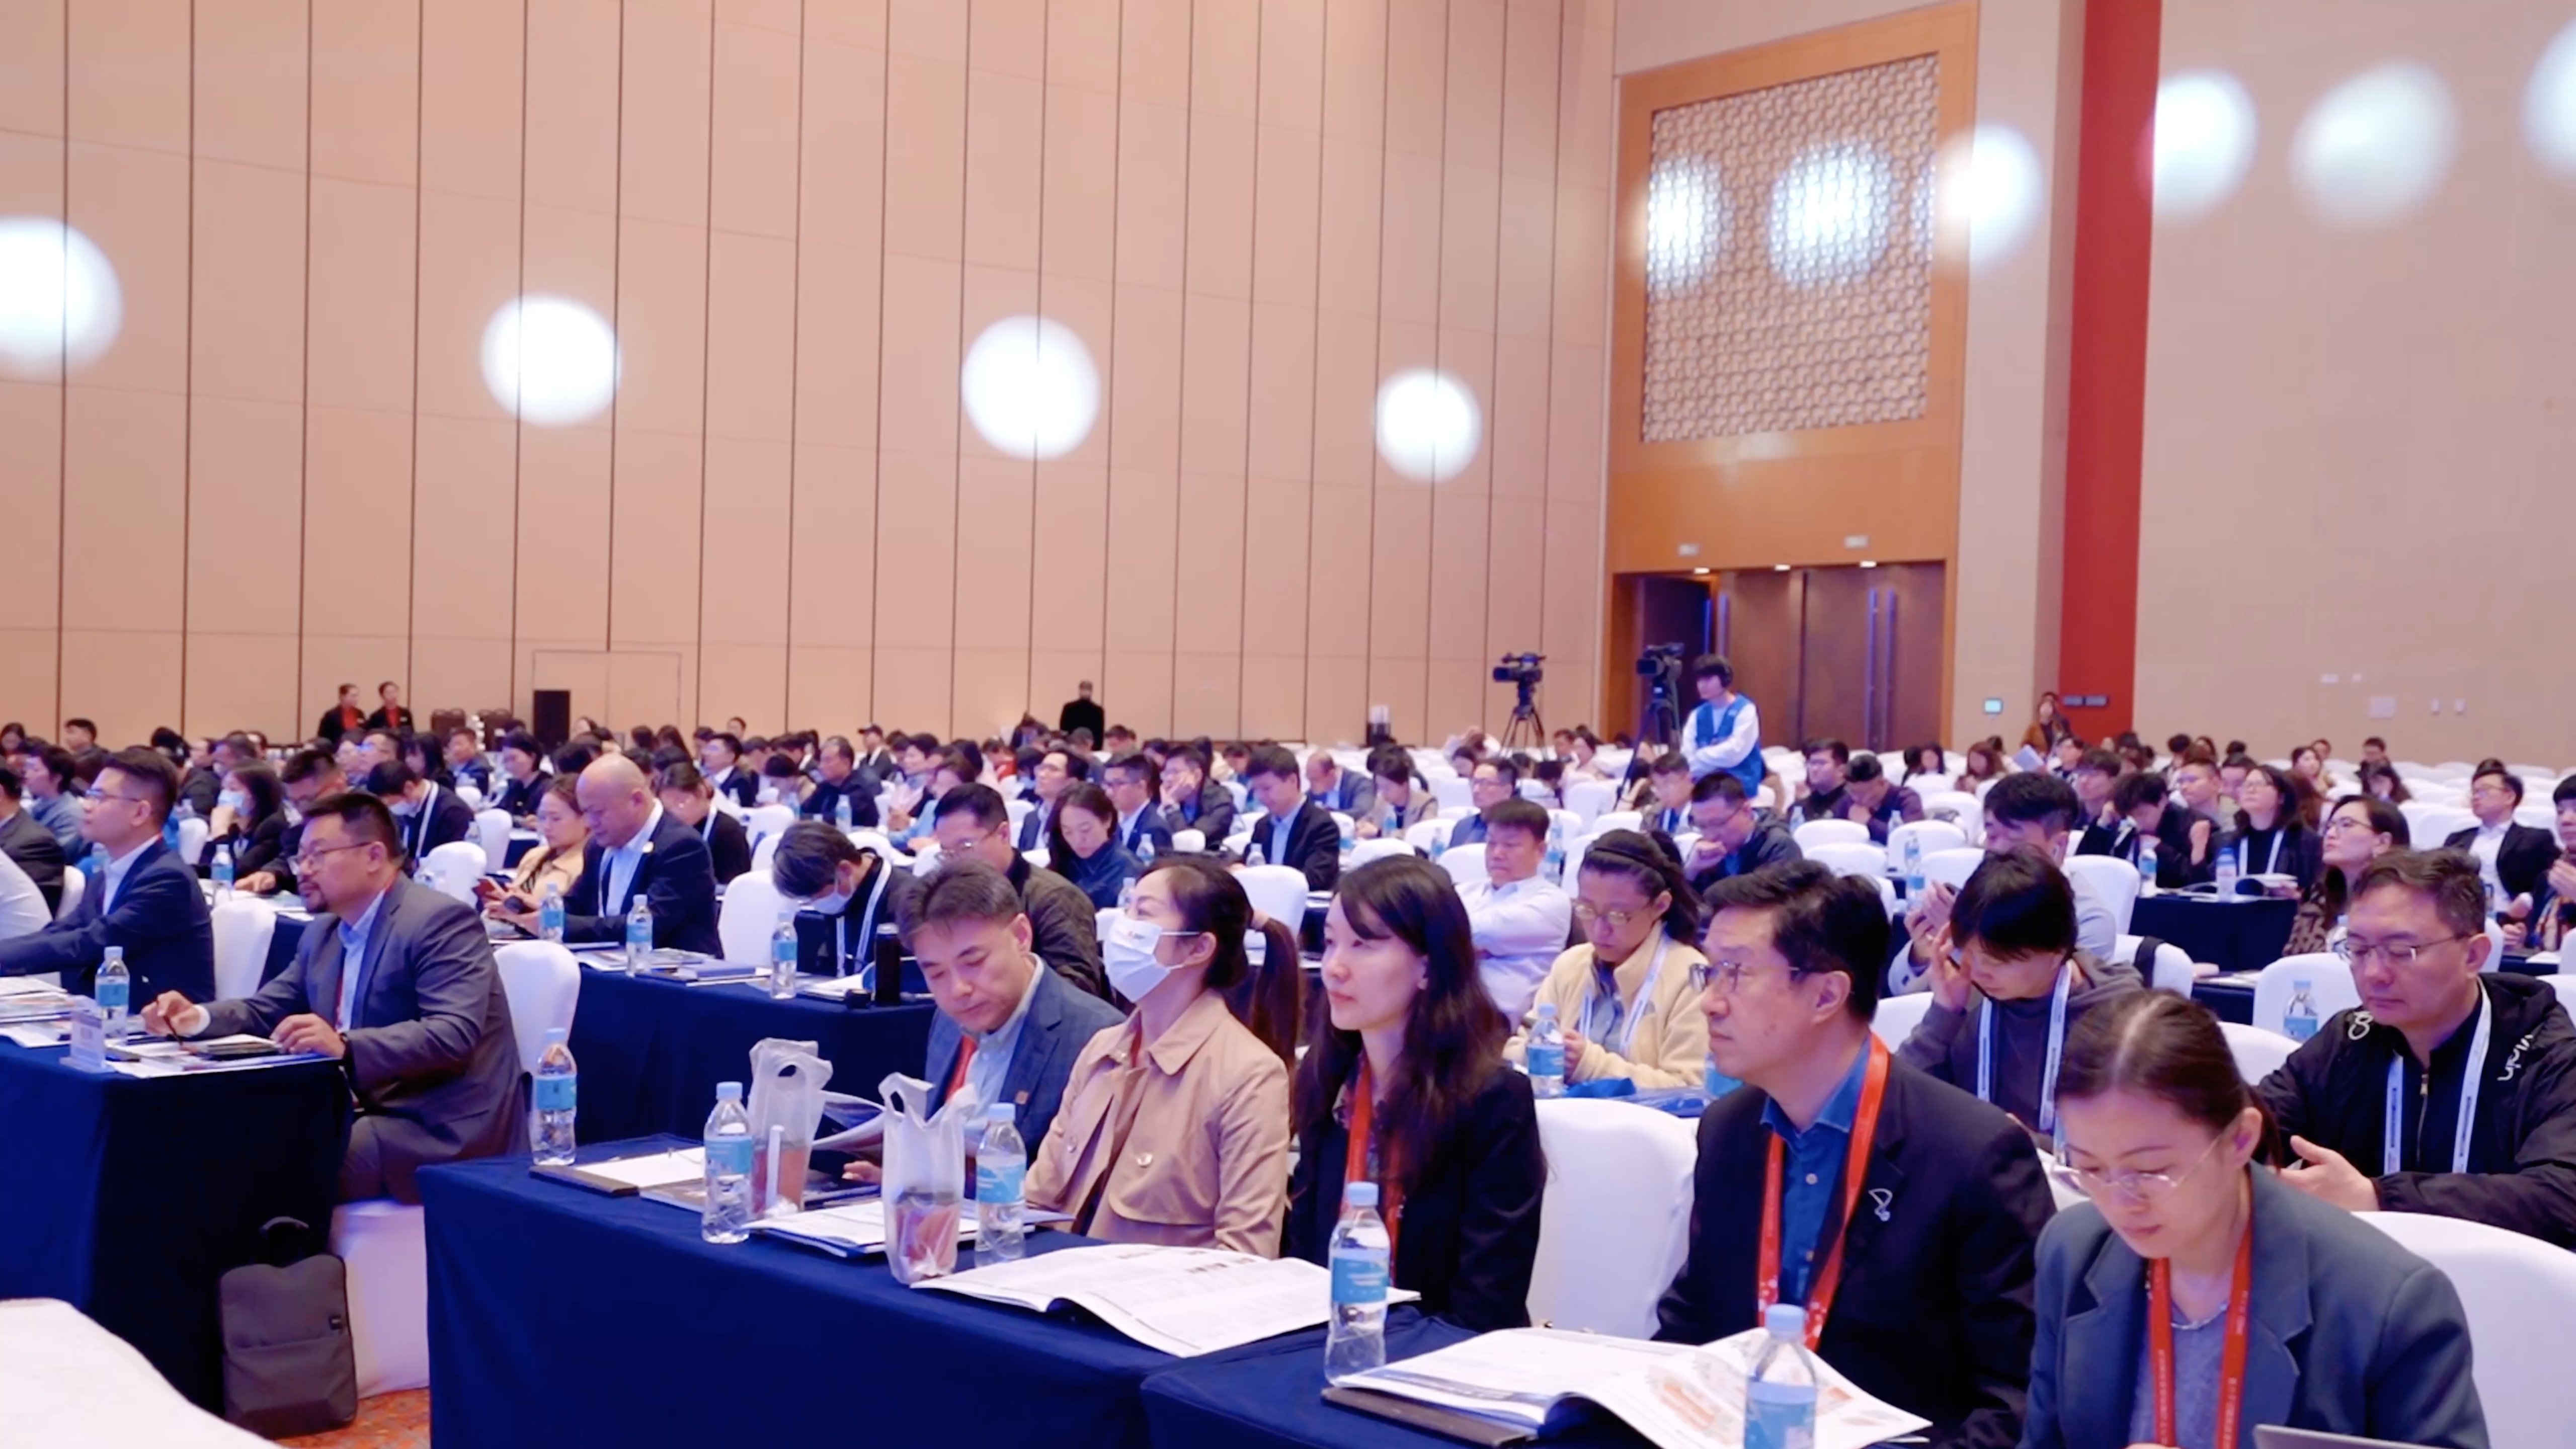 China Experimental Medicine Conference (CEMC)